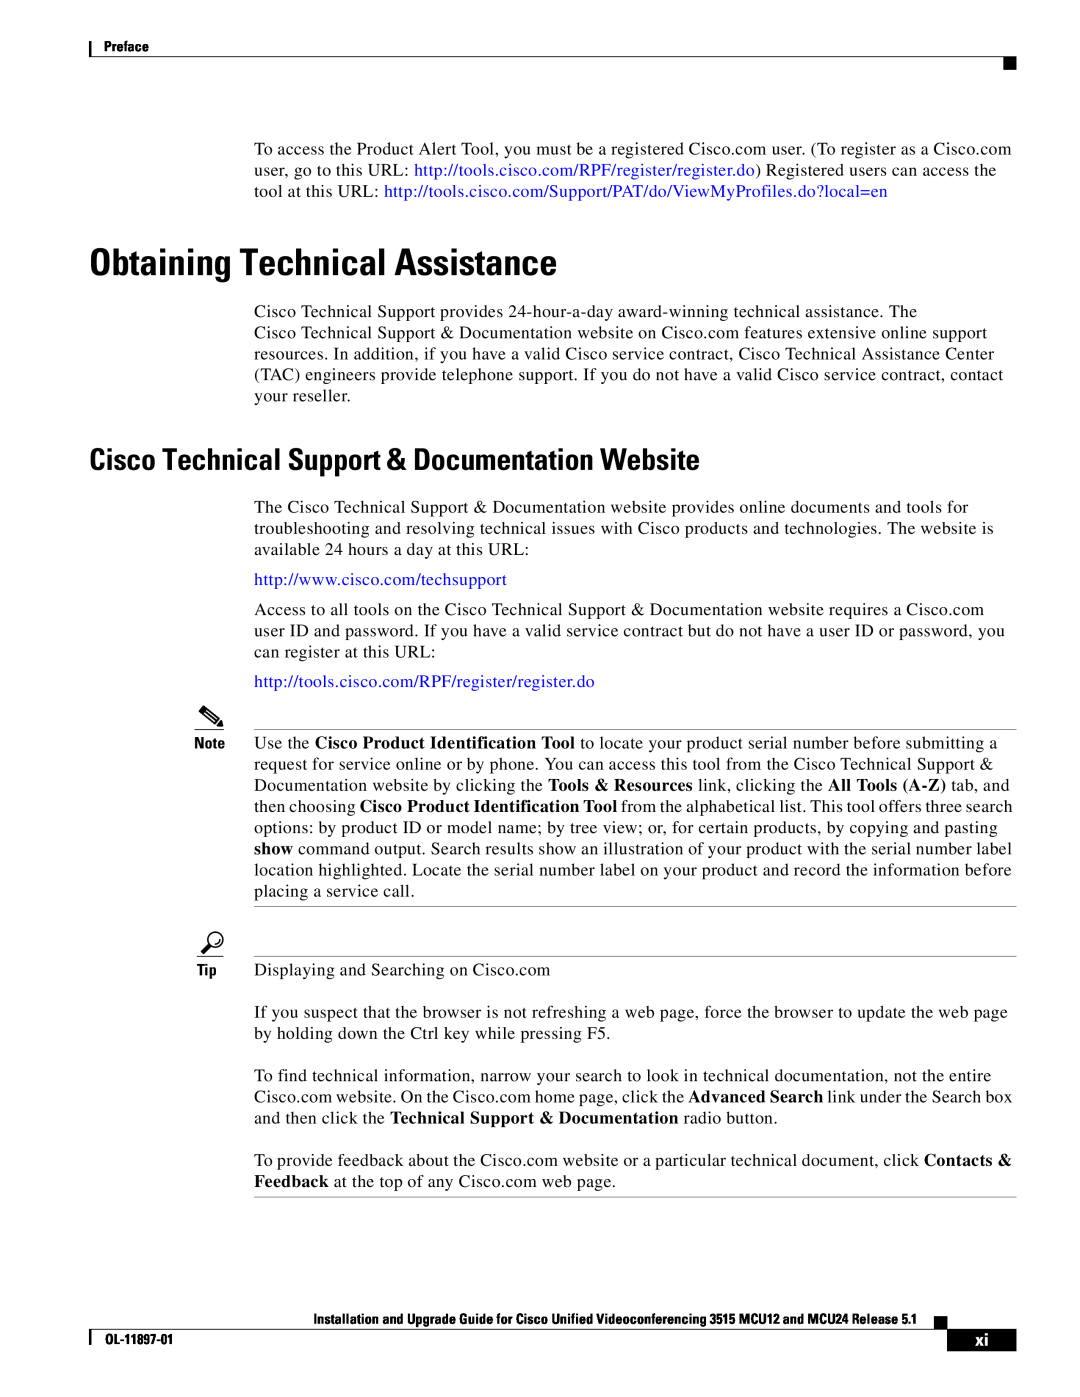 Cisco Systems MCU24 manual Obtaining Technical Assistance, Cisco Technical Support & Documentation Website 